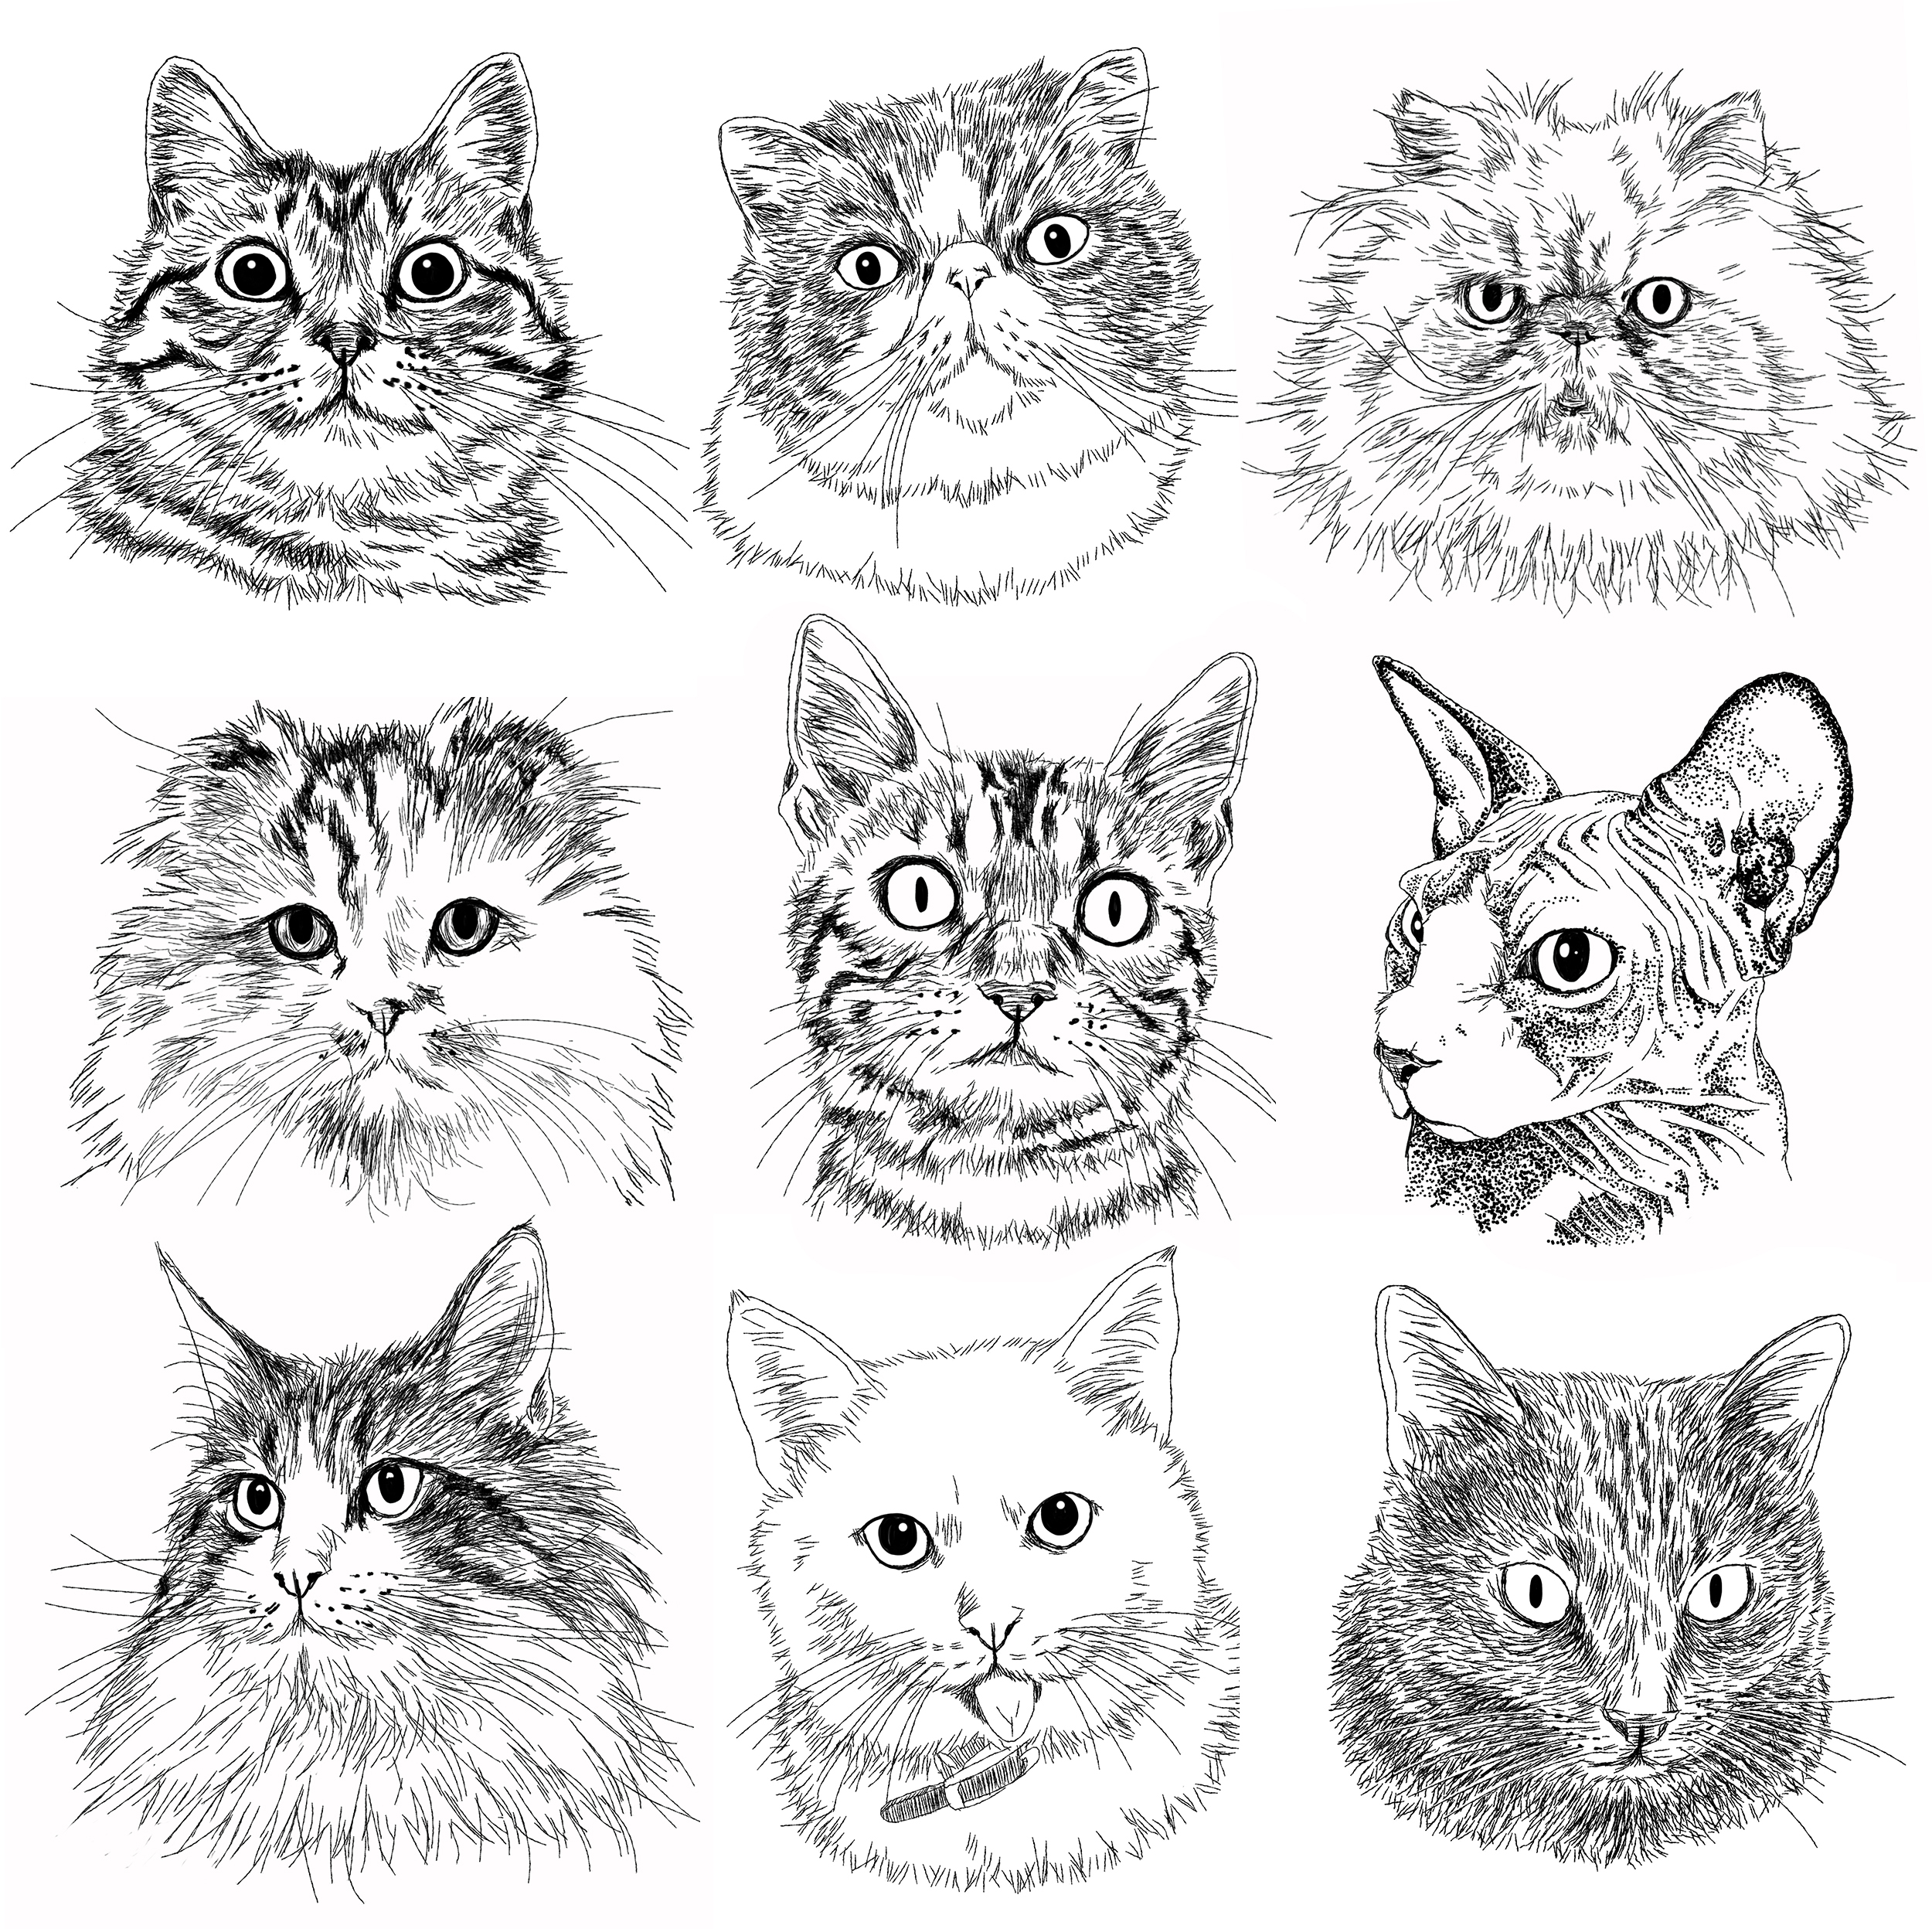 Custom Portraits Of Only Face Illlust Of Cats Dogs And Animals 猫雑貨 グッズ通販 猫や動物イラスト 似顔絵作成 365cat Art